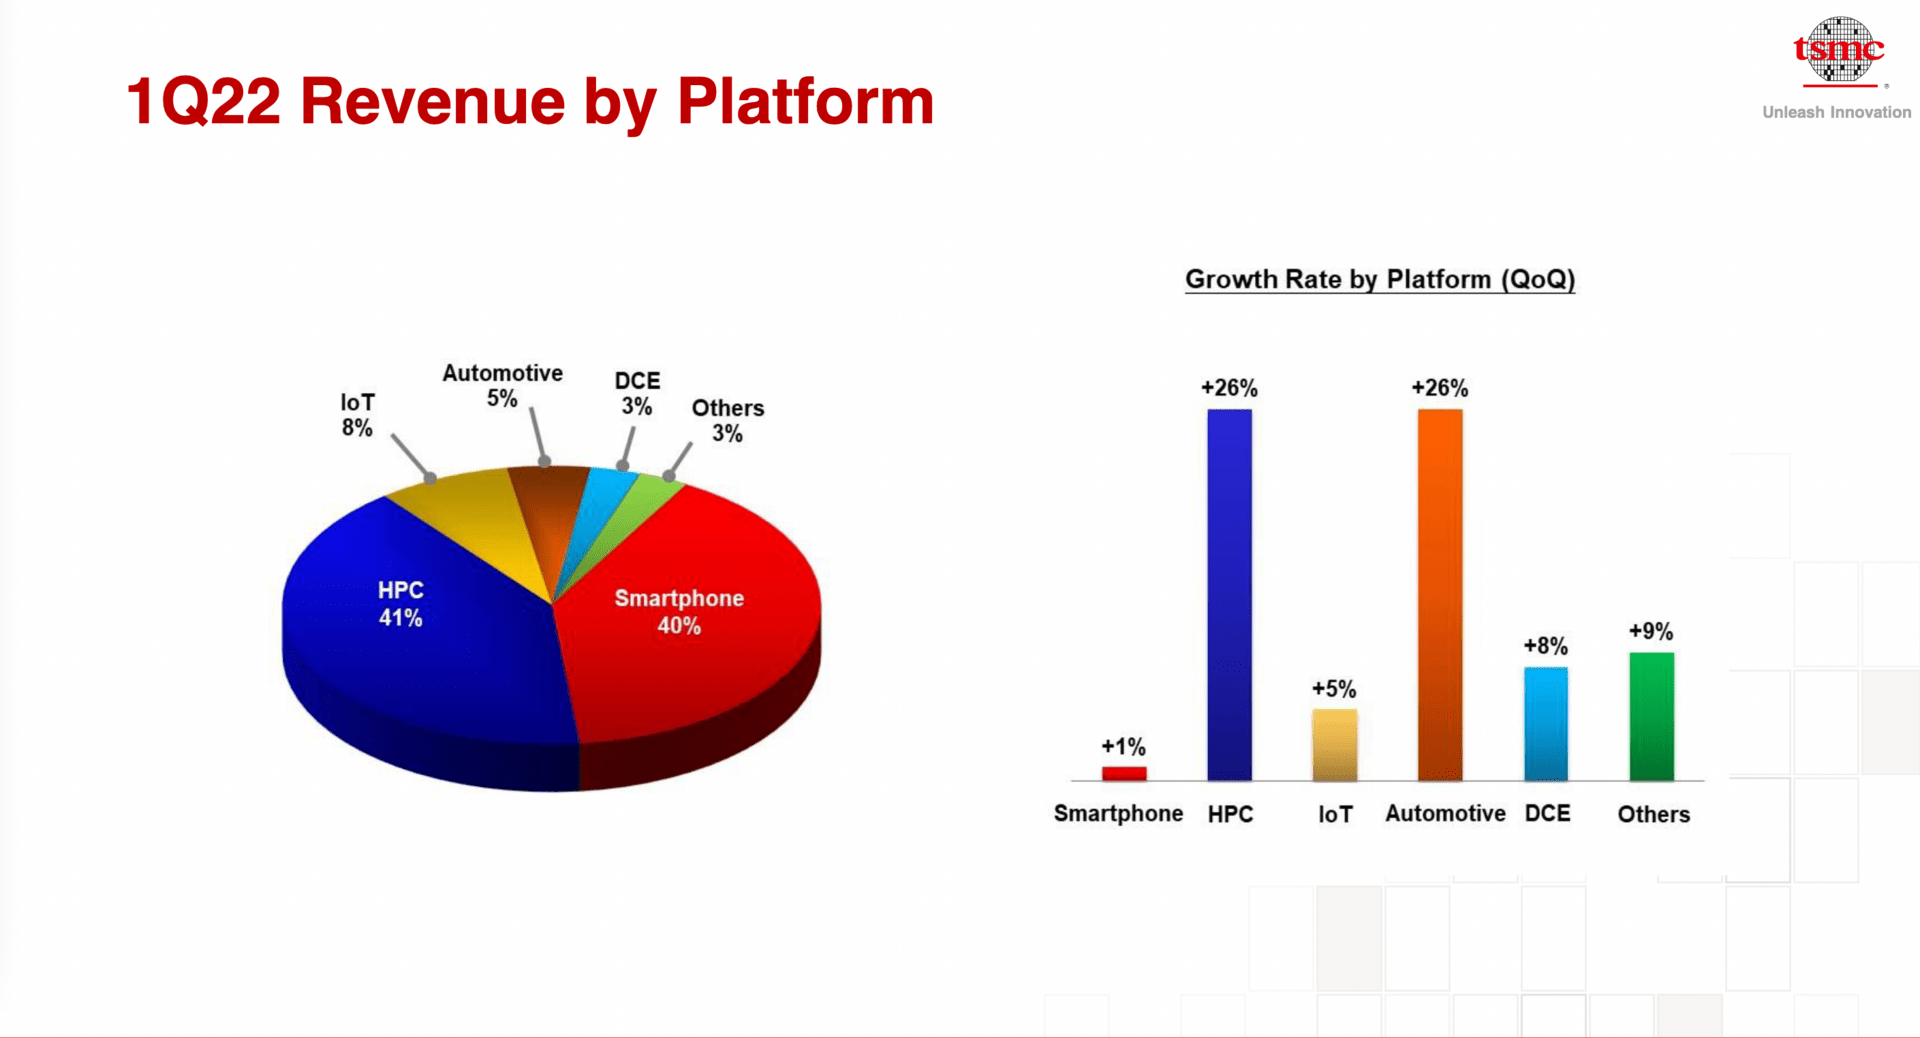 Quarterly revenue comparison by platform from Q4 to Q1